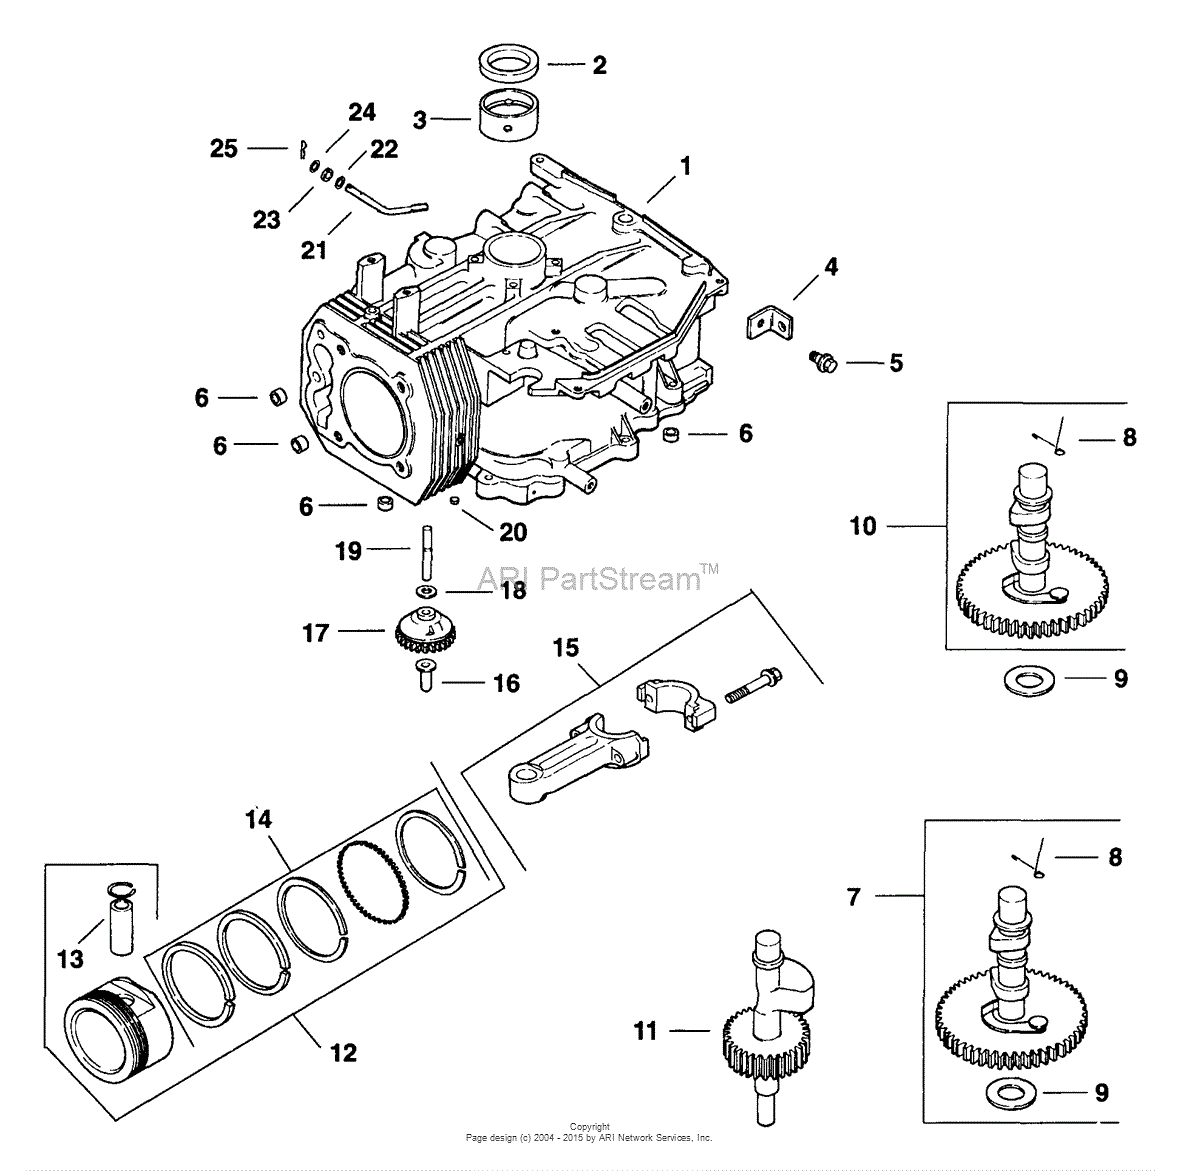 Kohler Command Engine Parts Diagram